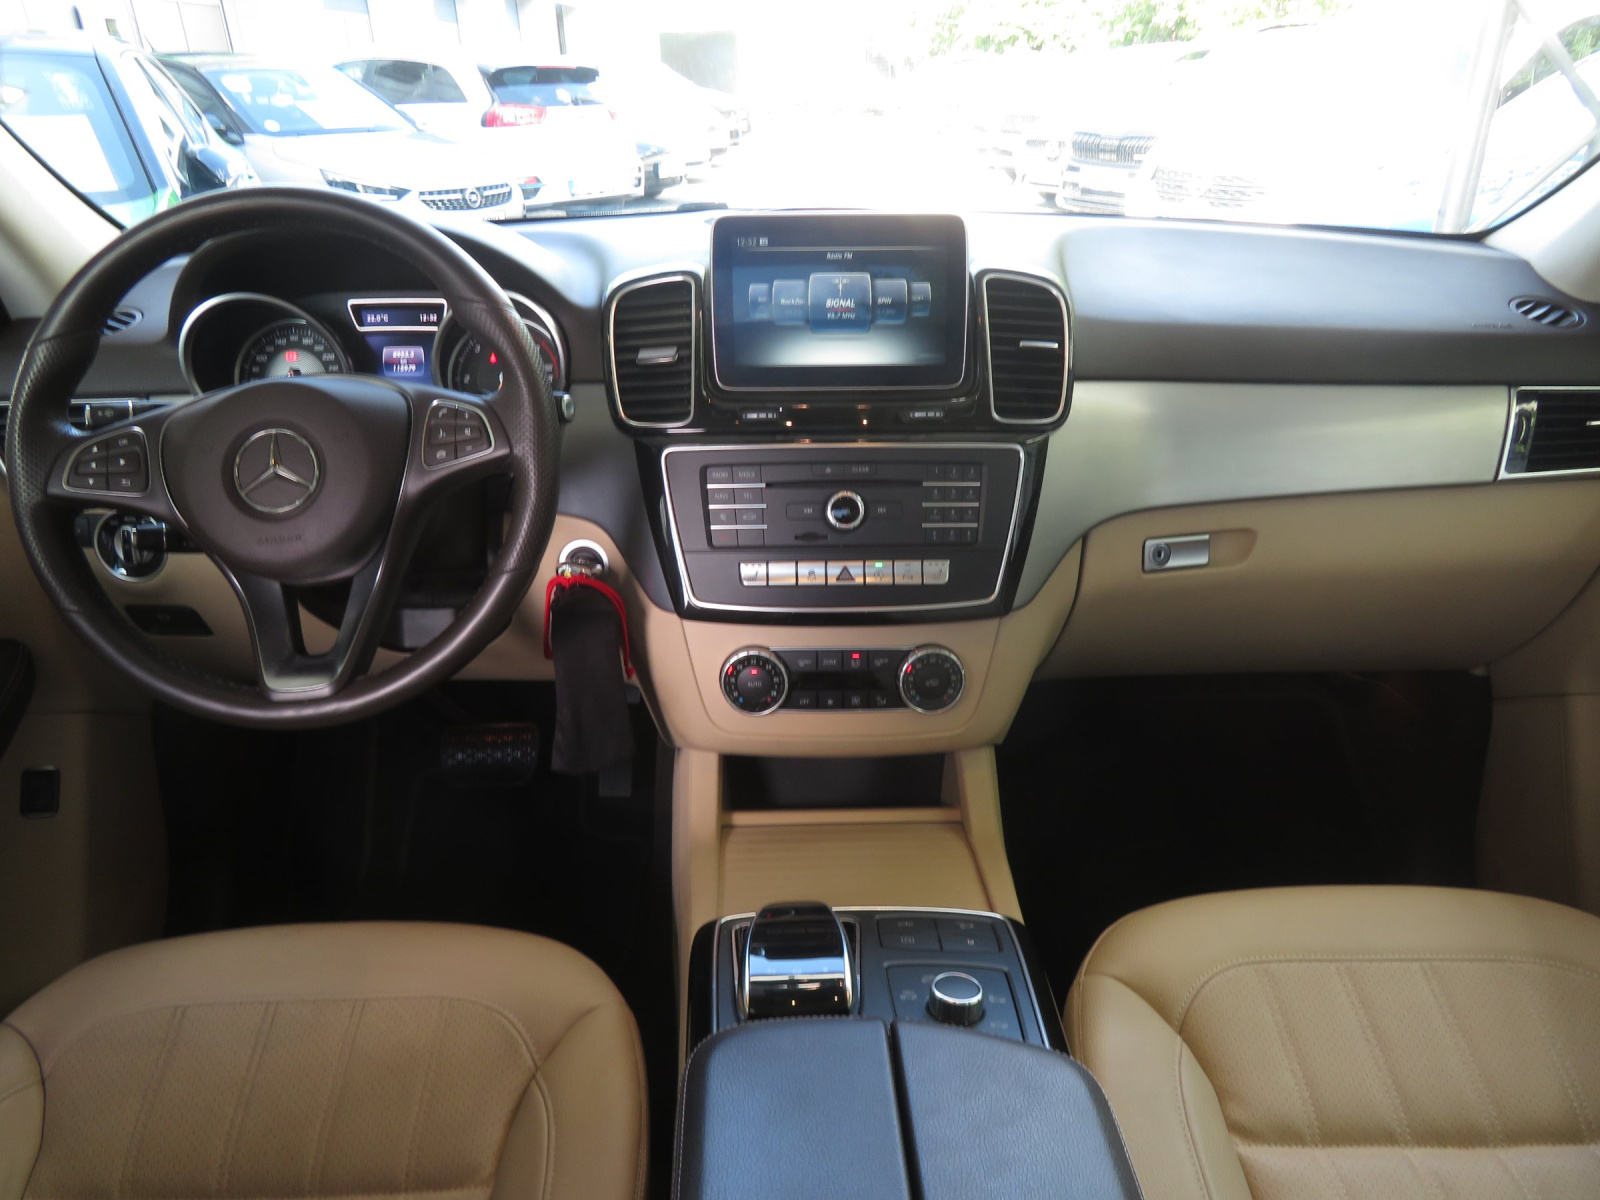 Mercedes-Benz GLE 350d, 2015, GLE 350d, 190kW, 4x4